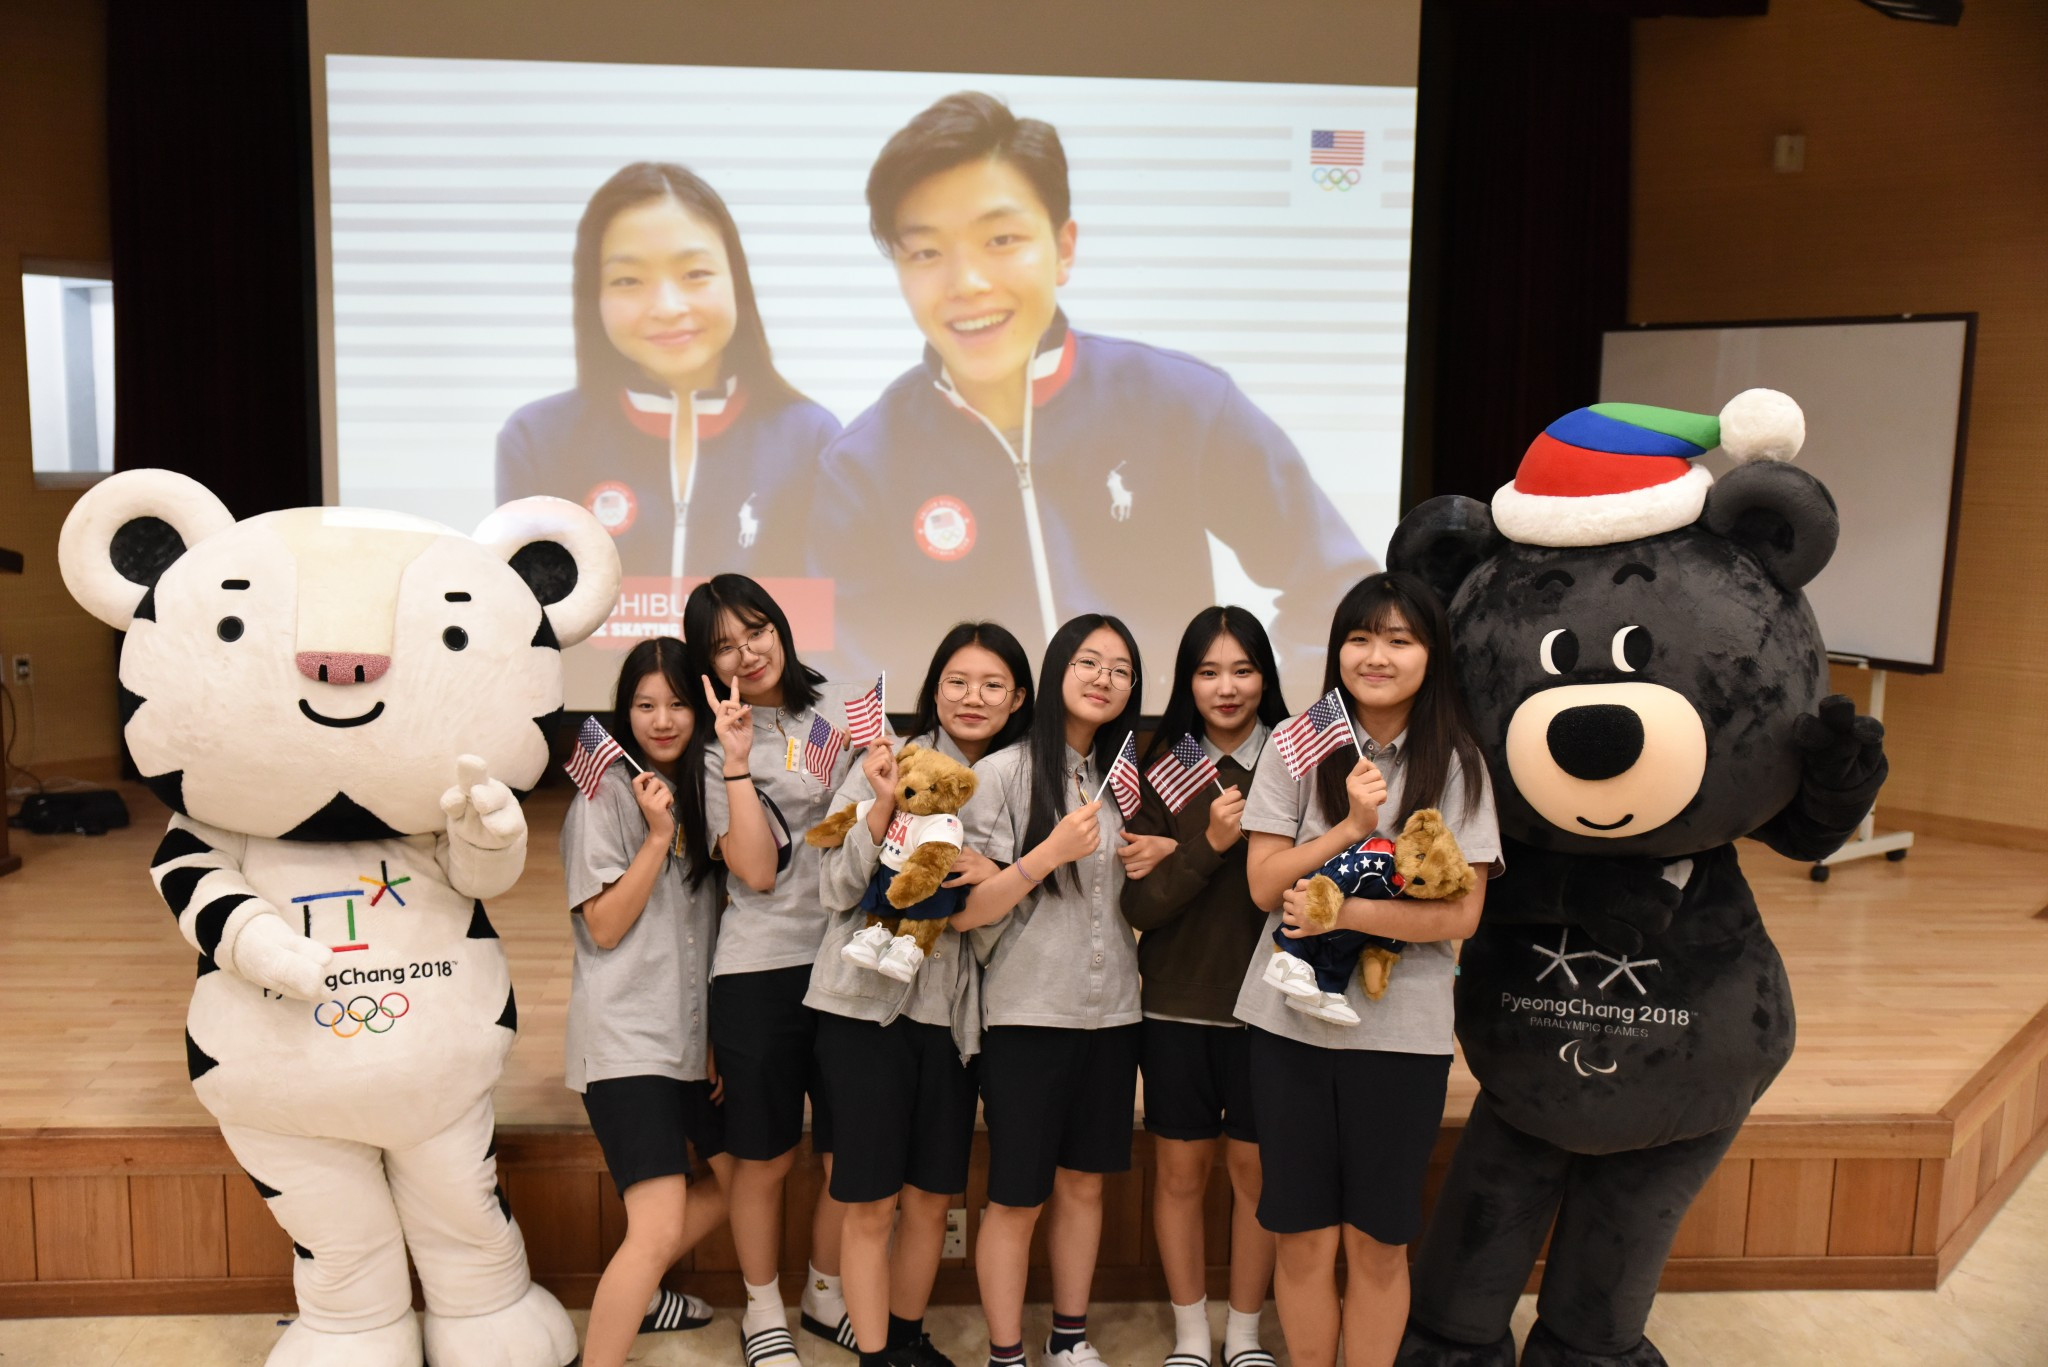 USOC launches Korean youth mentorship programme in partnership with Pyeongchang 2018